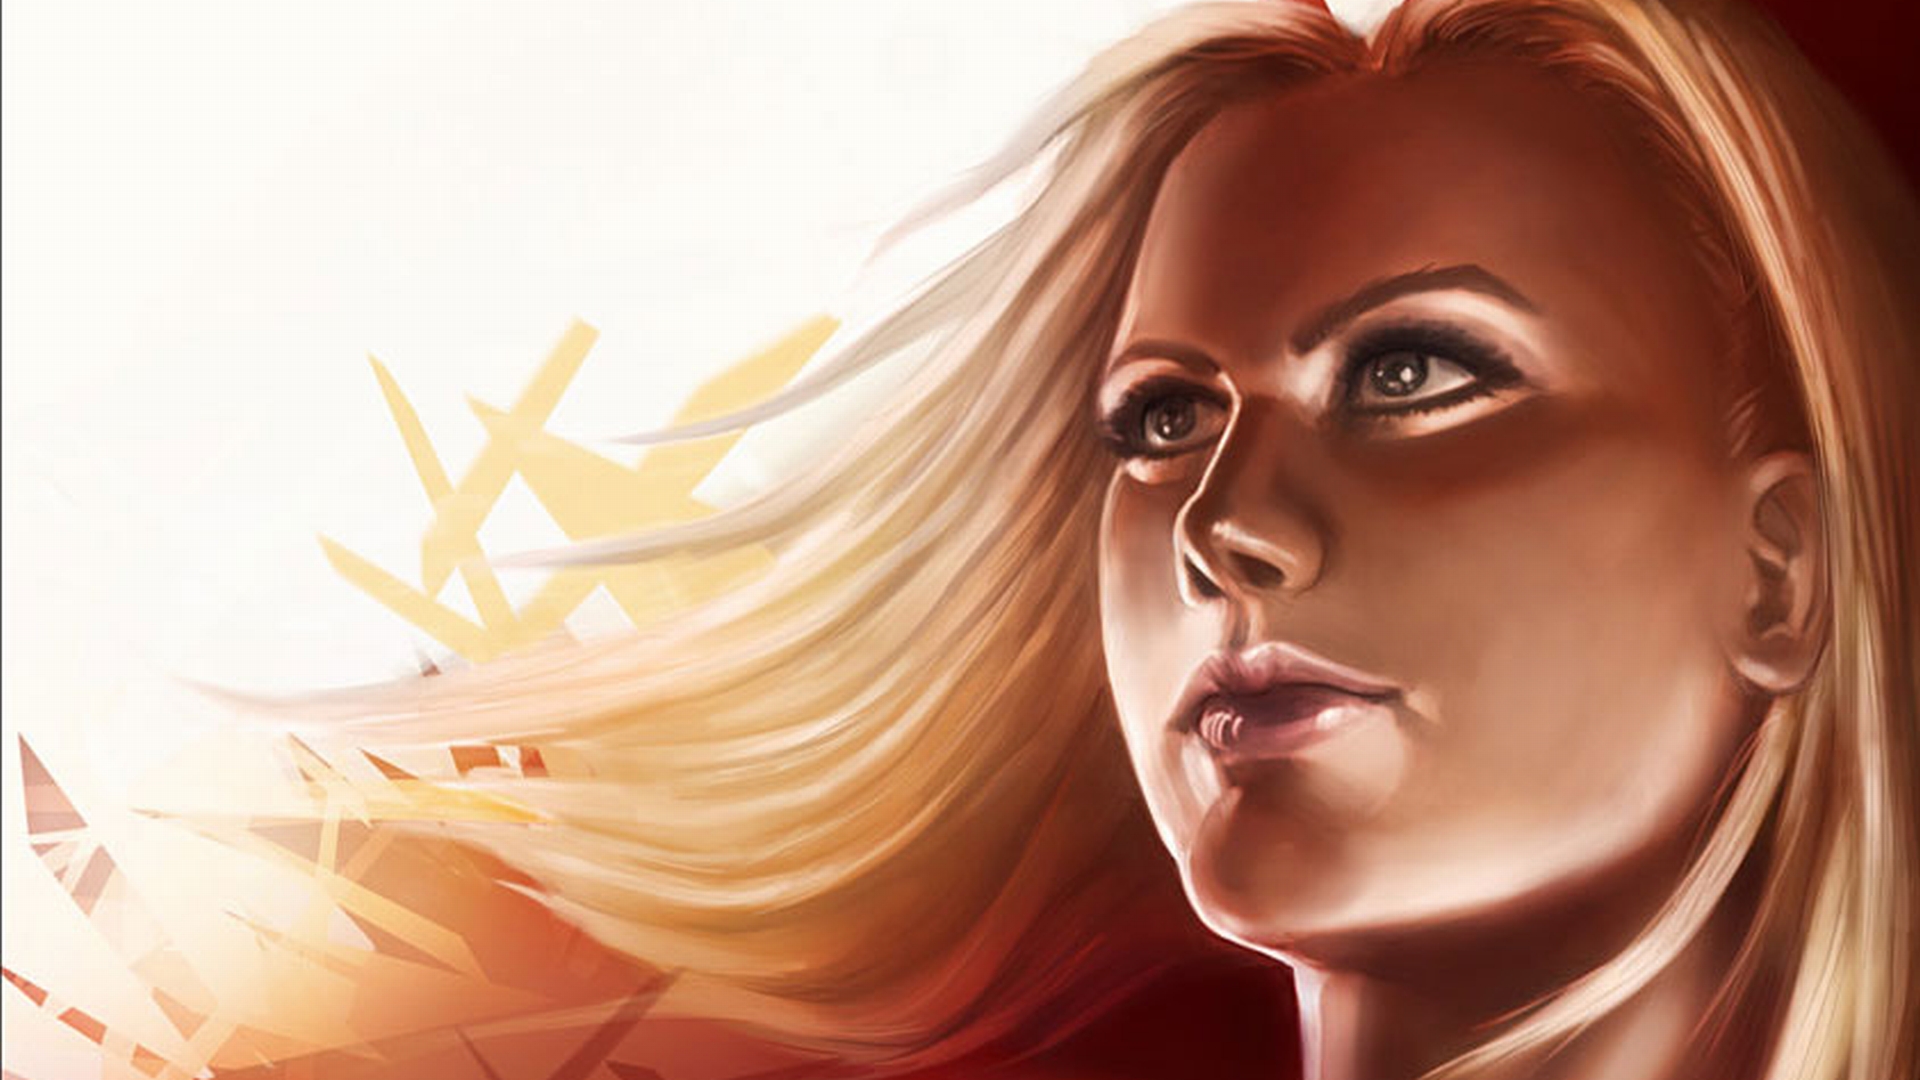 Emma Frost, the fierce X-Men character, portrayed in a captivating comics-inspired desktop wallpaper.